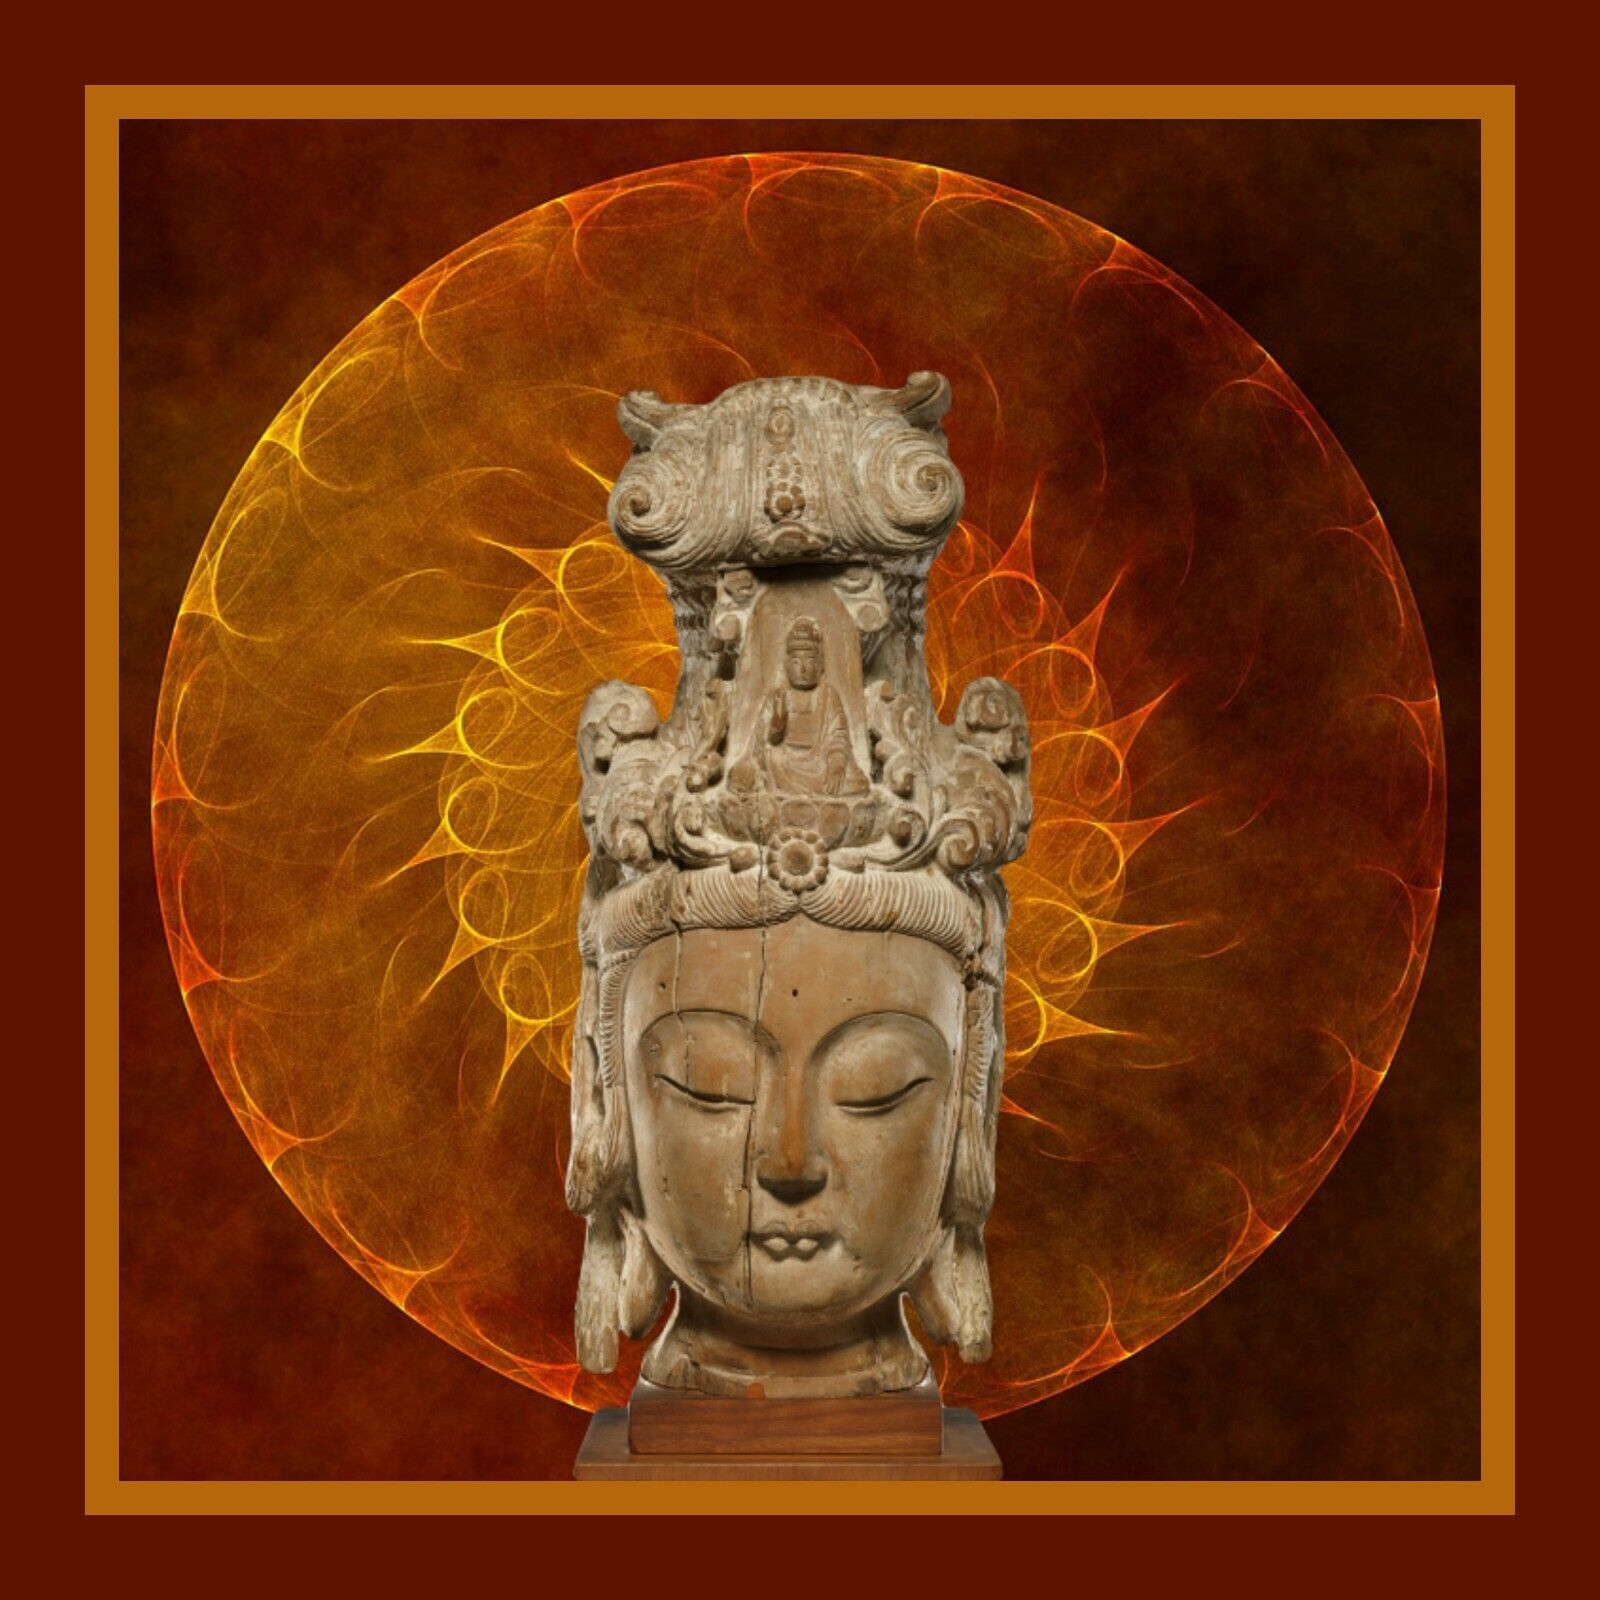 Guanyin Goddess of Compassion, BIG MAGNET 3.5 x 3.5 inches, Vintage Art Image